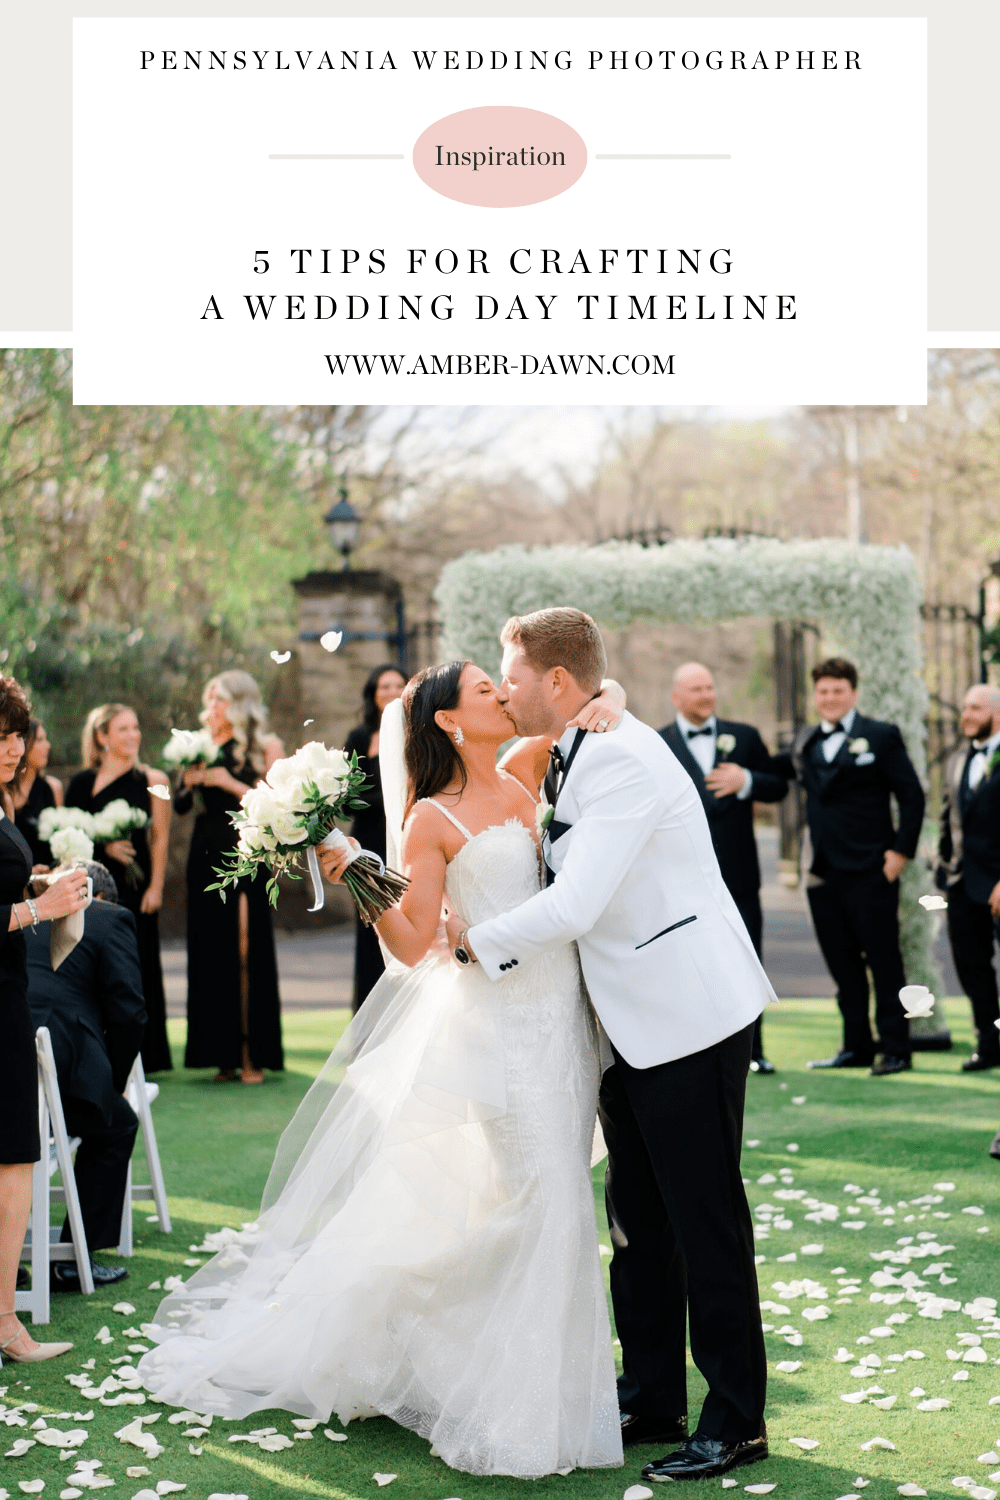 Crafting a Wedding Day Timeline | 5 tips by Philadelphia Wedding Photographer Amber Dawn